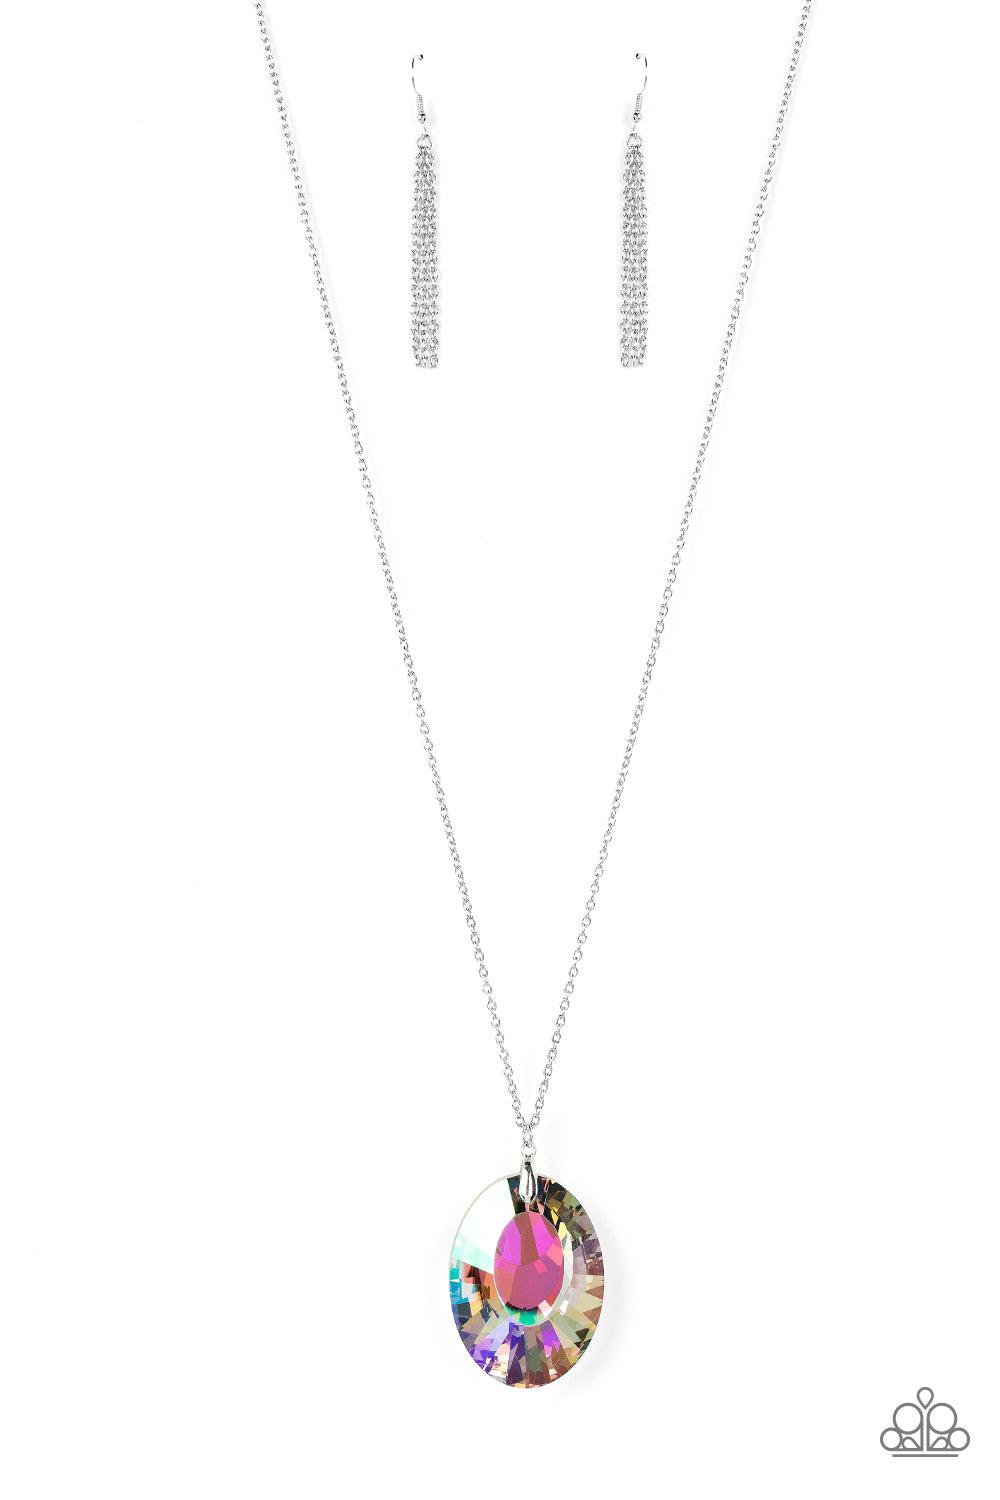 Celestial Essence Multi Iridescent Gem Necklace - Paparazzi Accessories- lightbox - CarasShop.com - $5 Jewelry by Cara Jewels